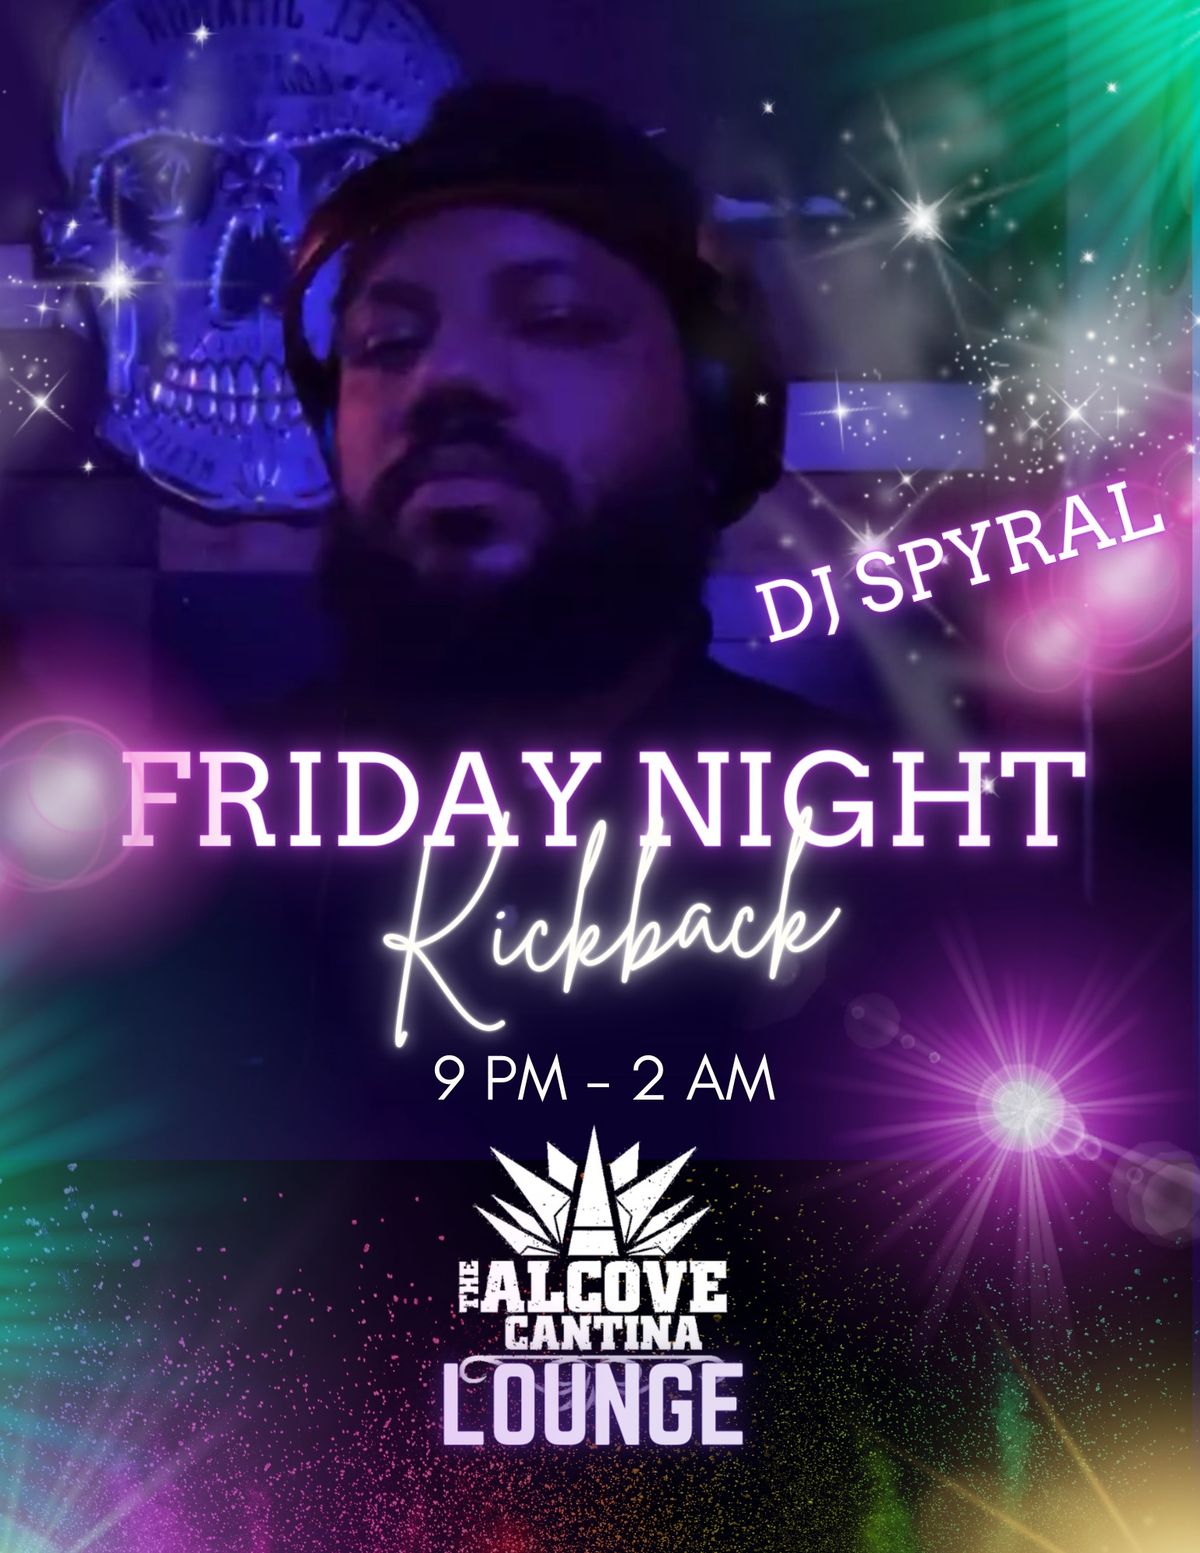 Friday Night Kickback with DJ Spyral